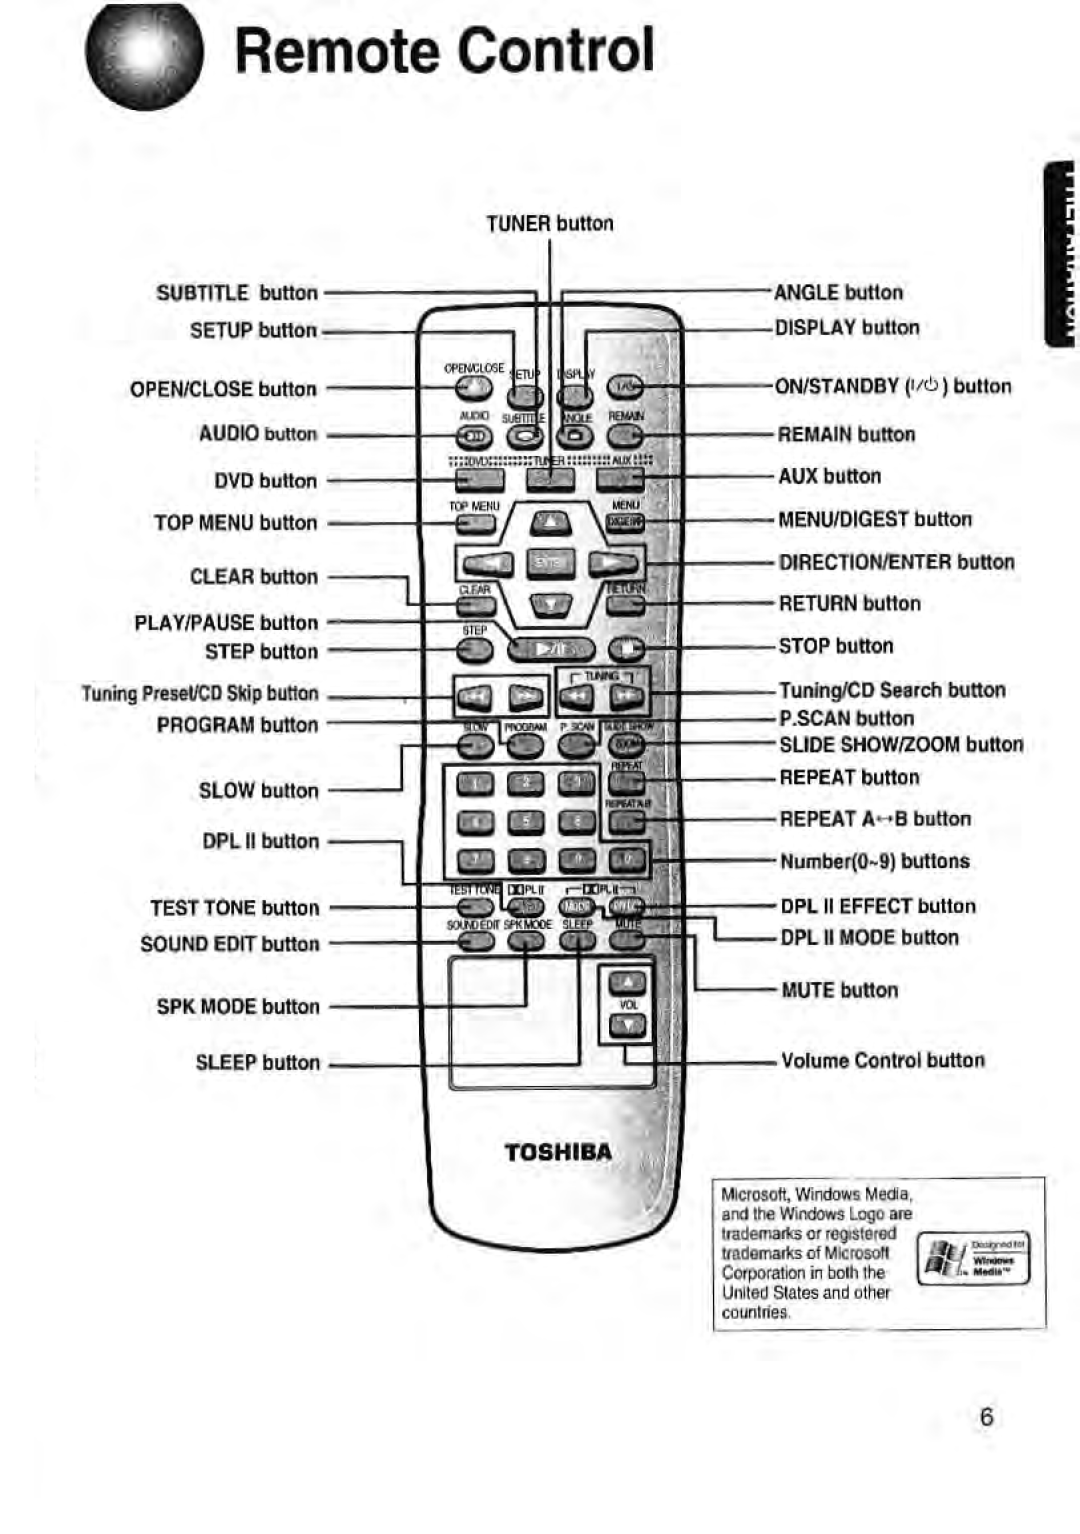 Toshiba SD-43HK Remote Control, IE: LO QVO. a, Toshiba, TUNER button, SUBTITLE button, SETUP button, TOP MENU button, rn Q 